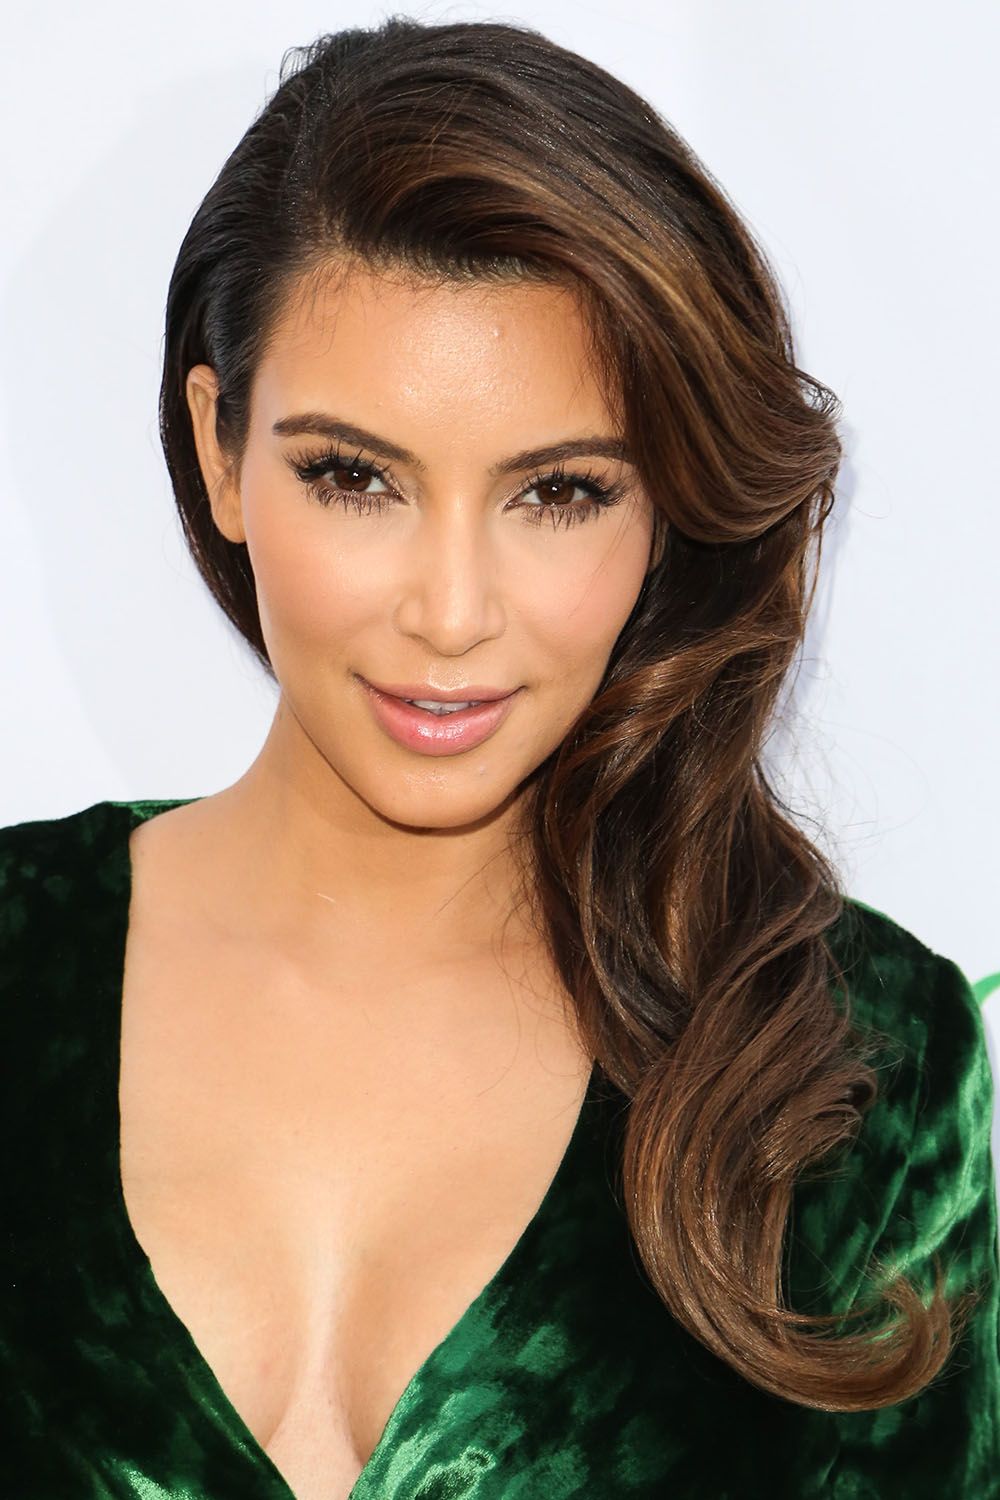 Kim Kardashian S Makeup And Hairstyles Kim Kardashian Beauty Evolution Through The Years